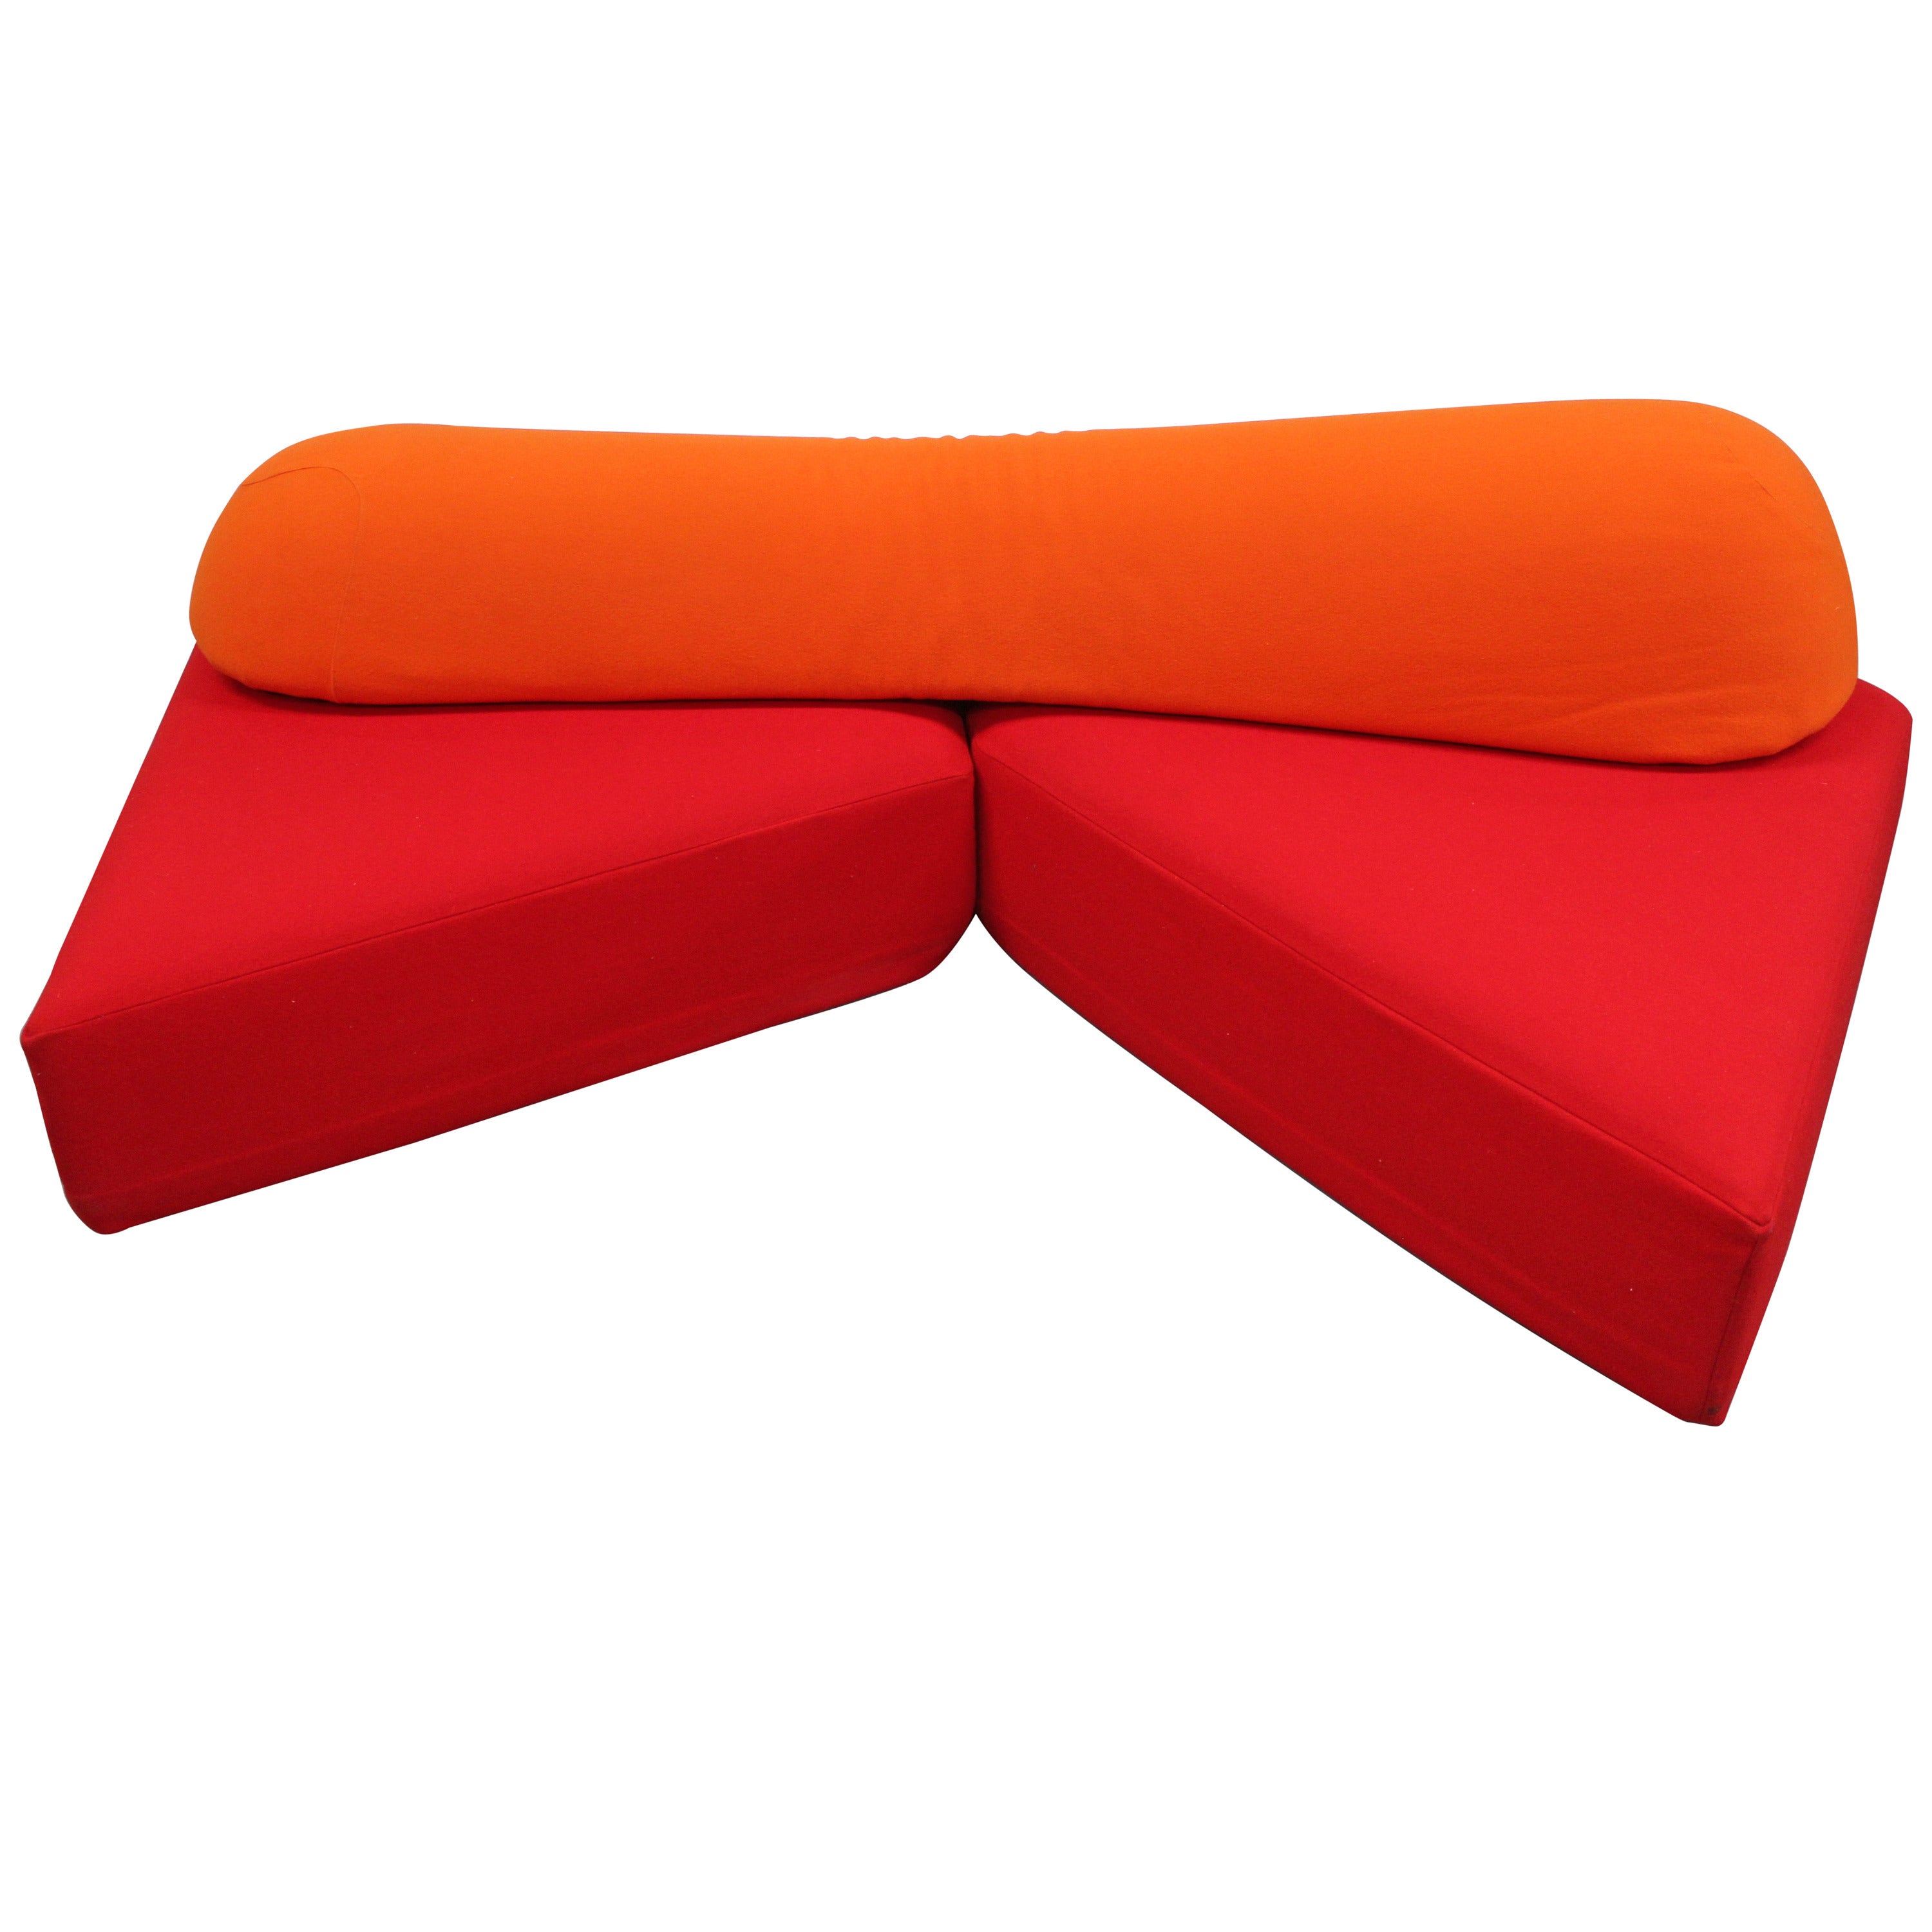 Edra "On The Rocks" Sectional Sofa in Red and Orange by Francesco Binafare